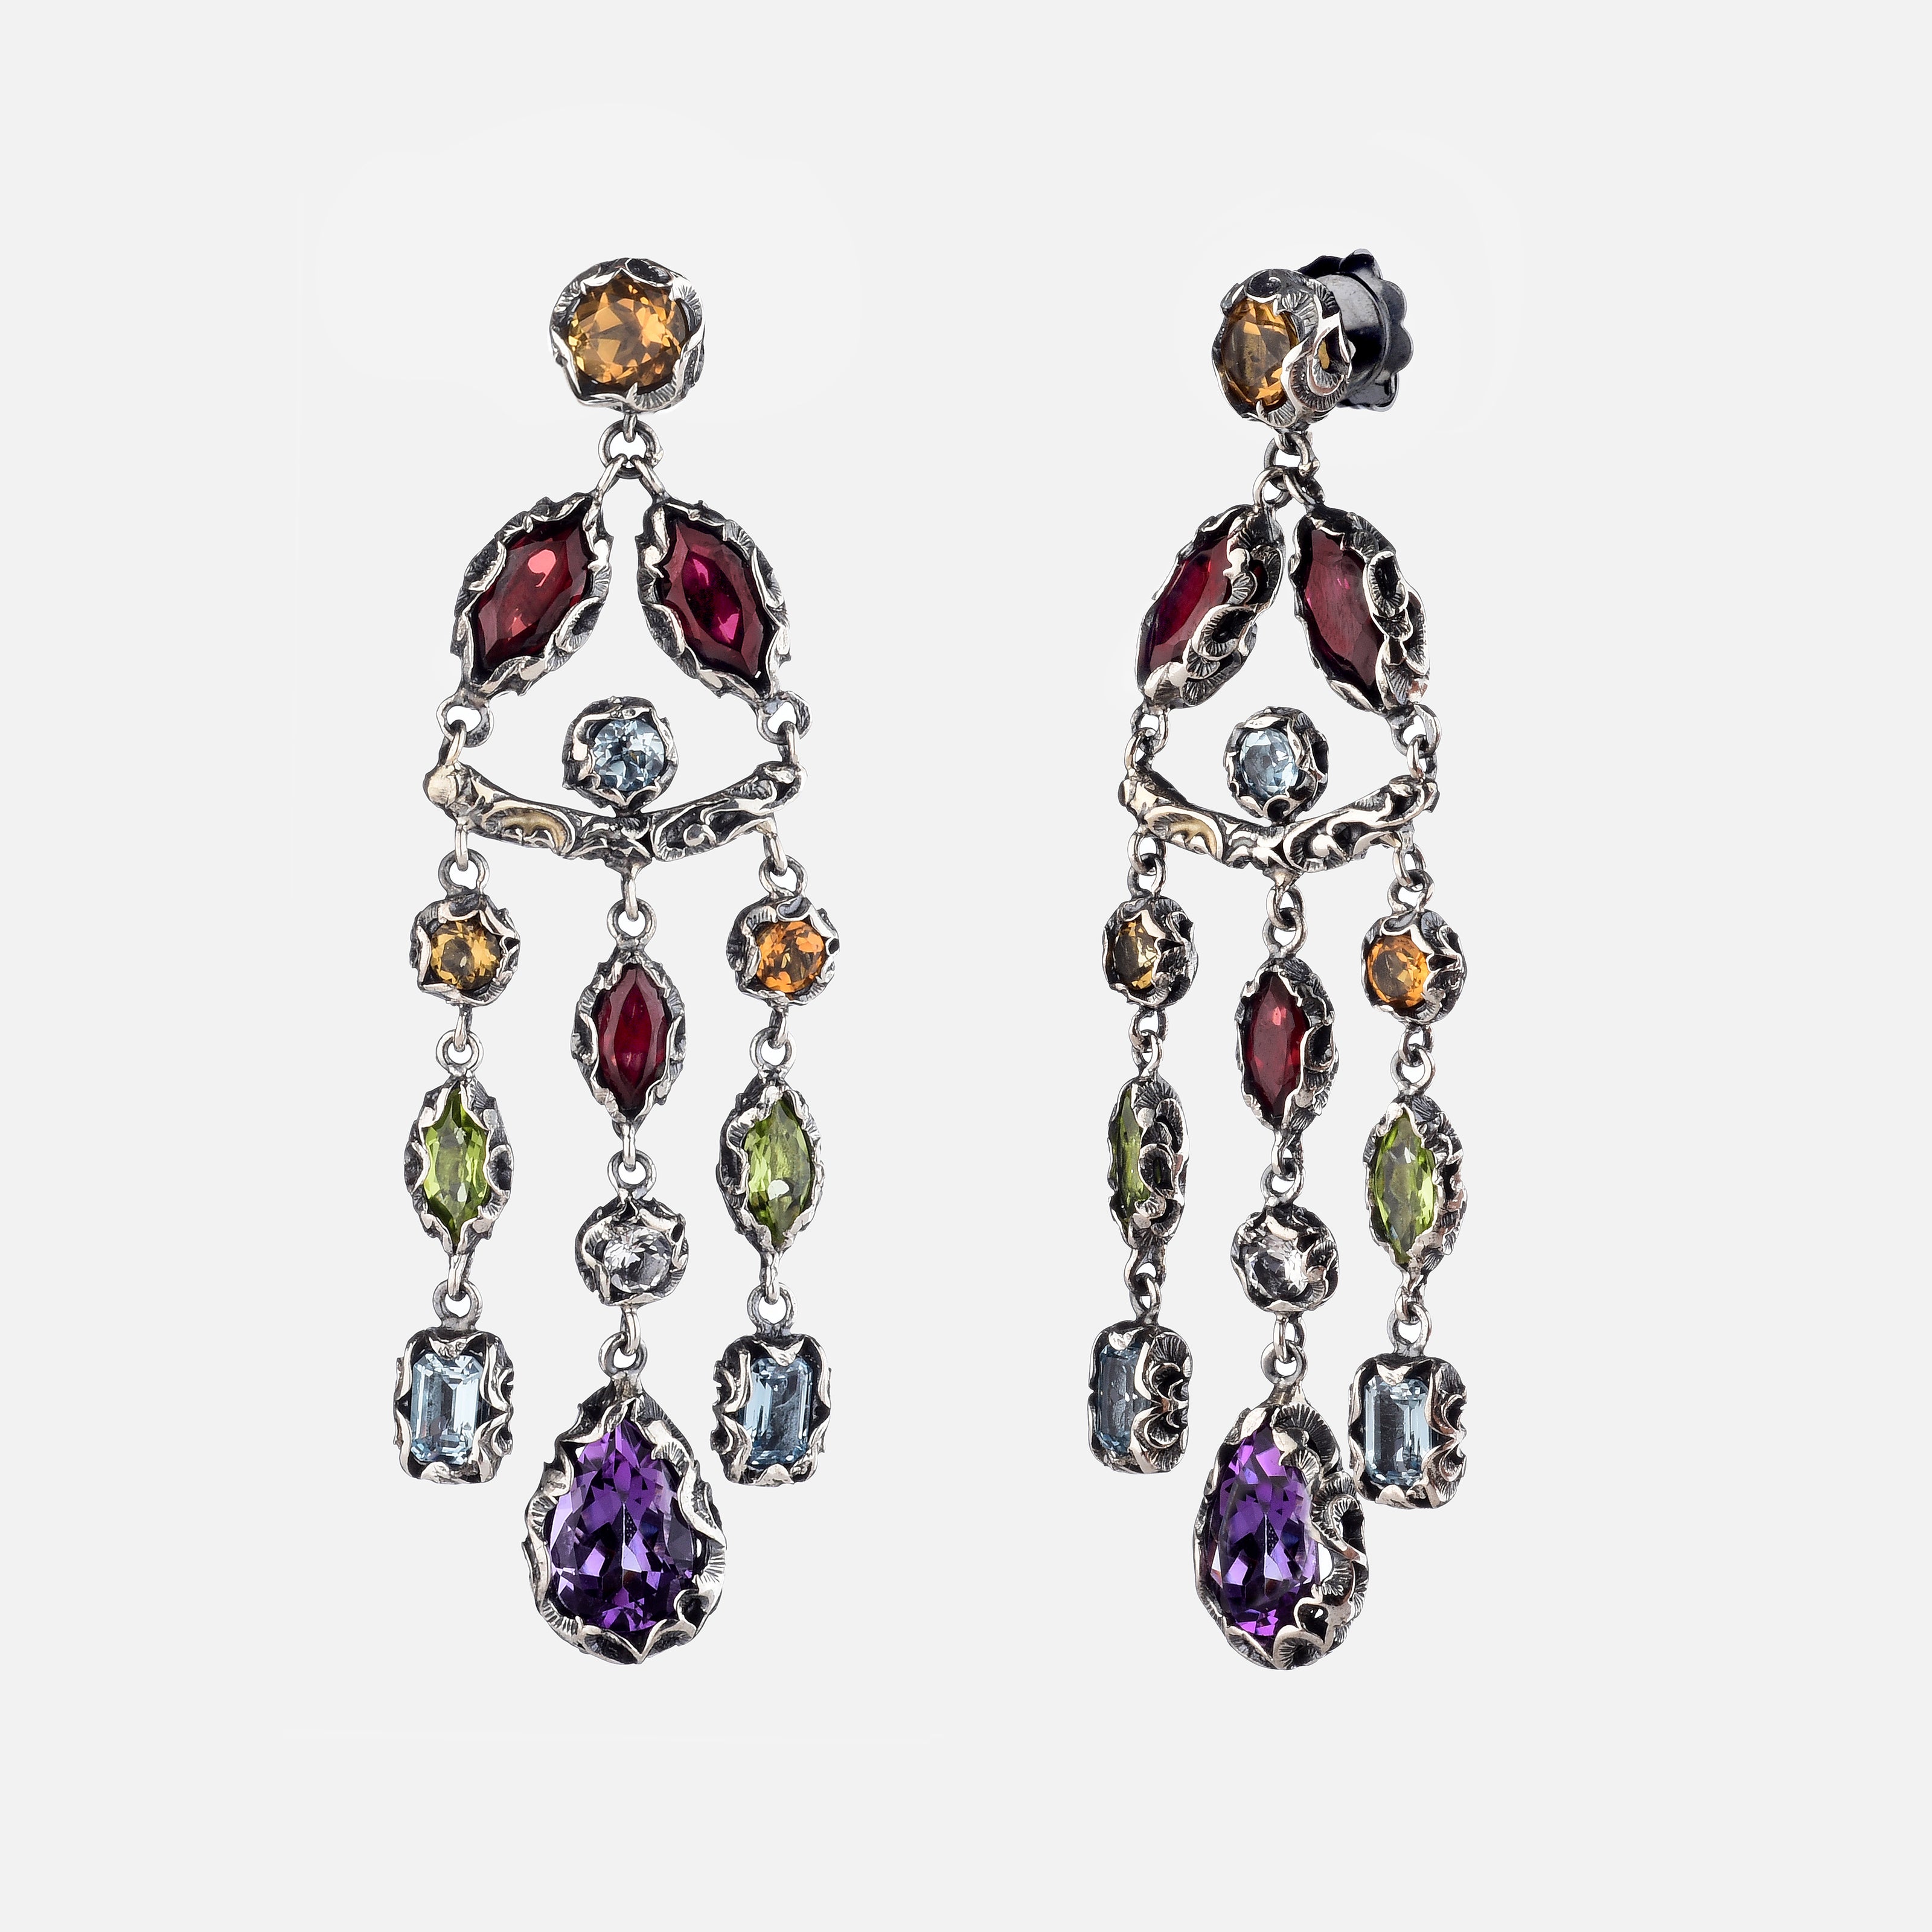 Shri Capsule chandelier earrings